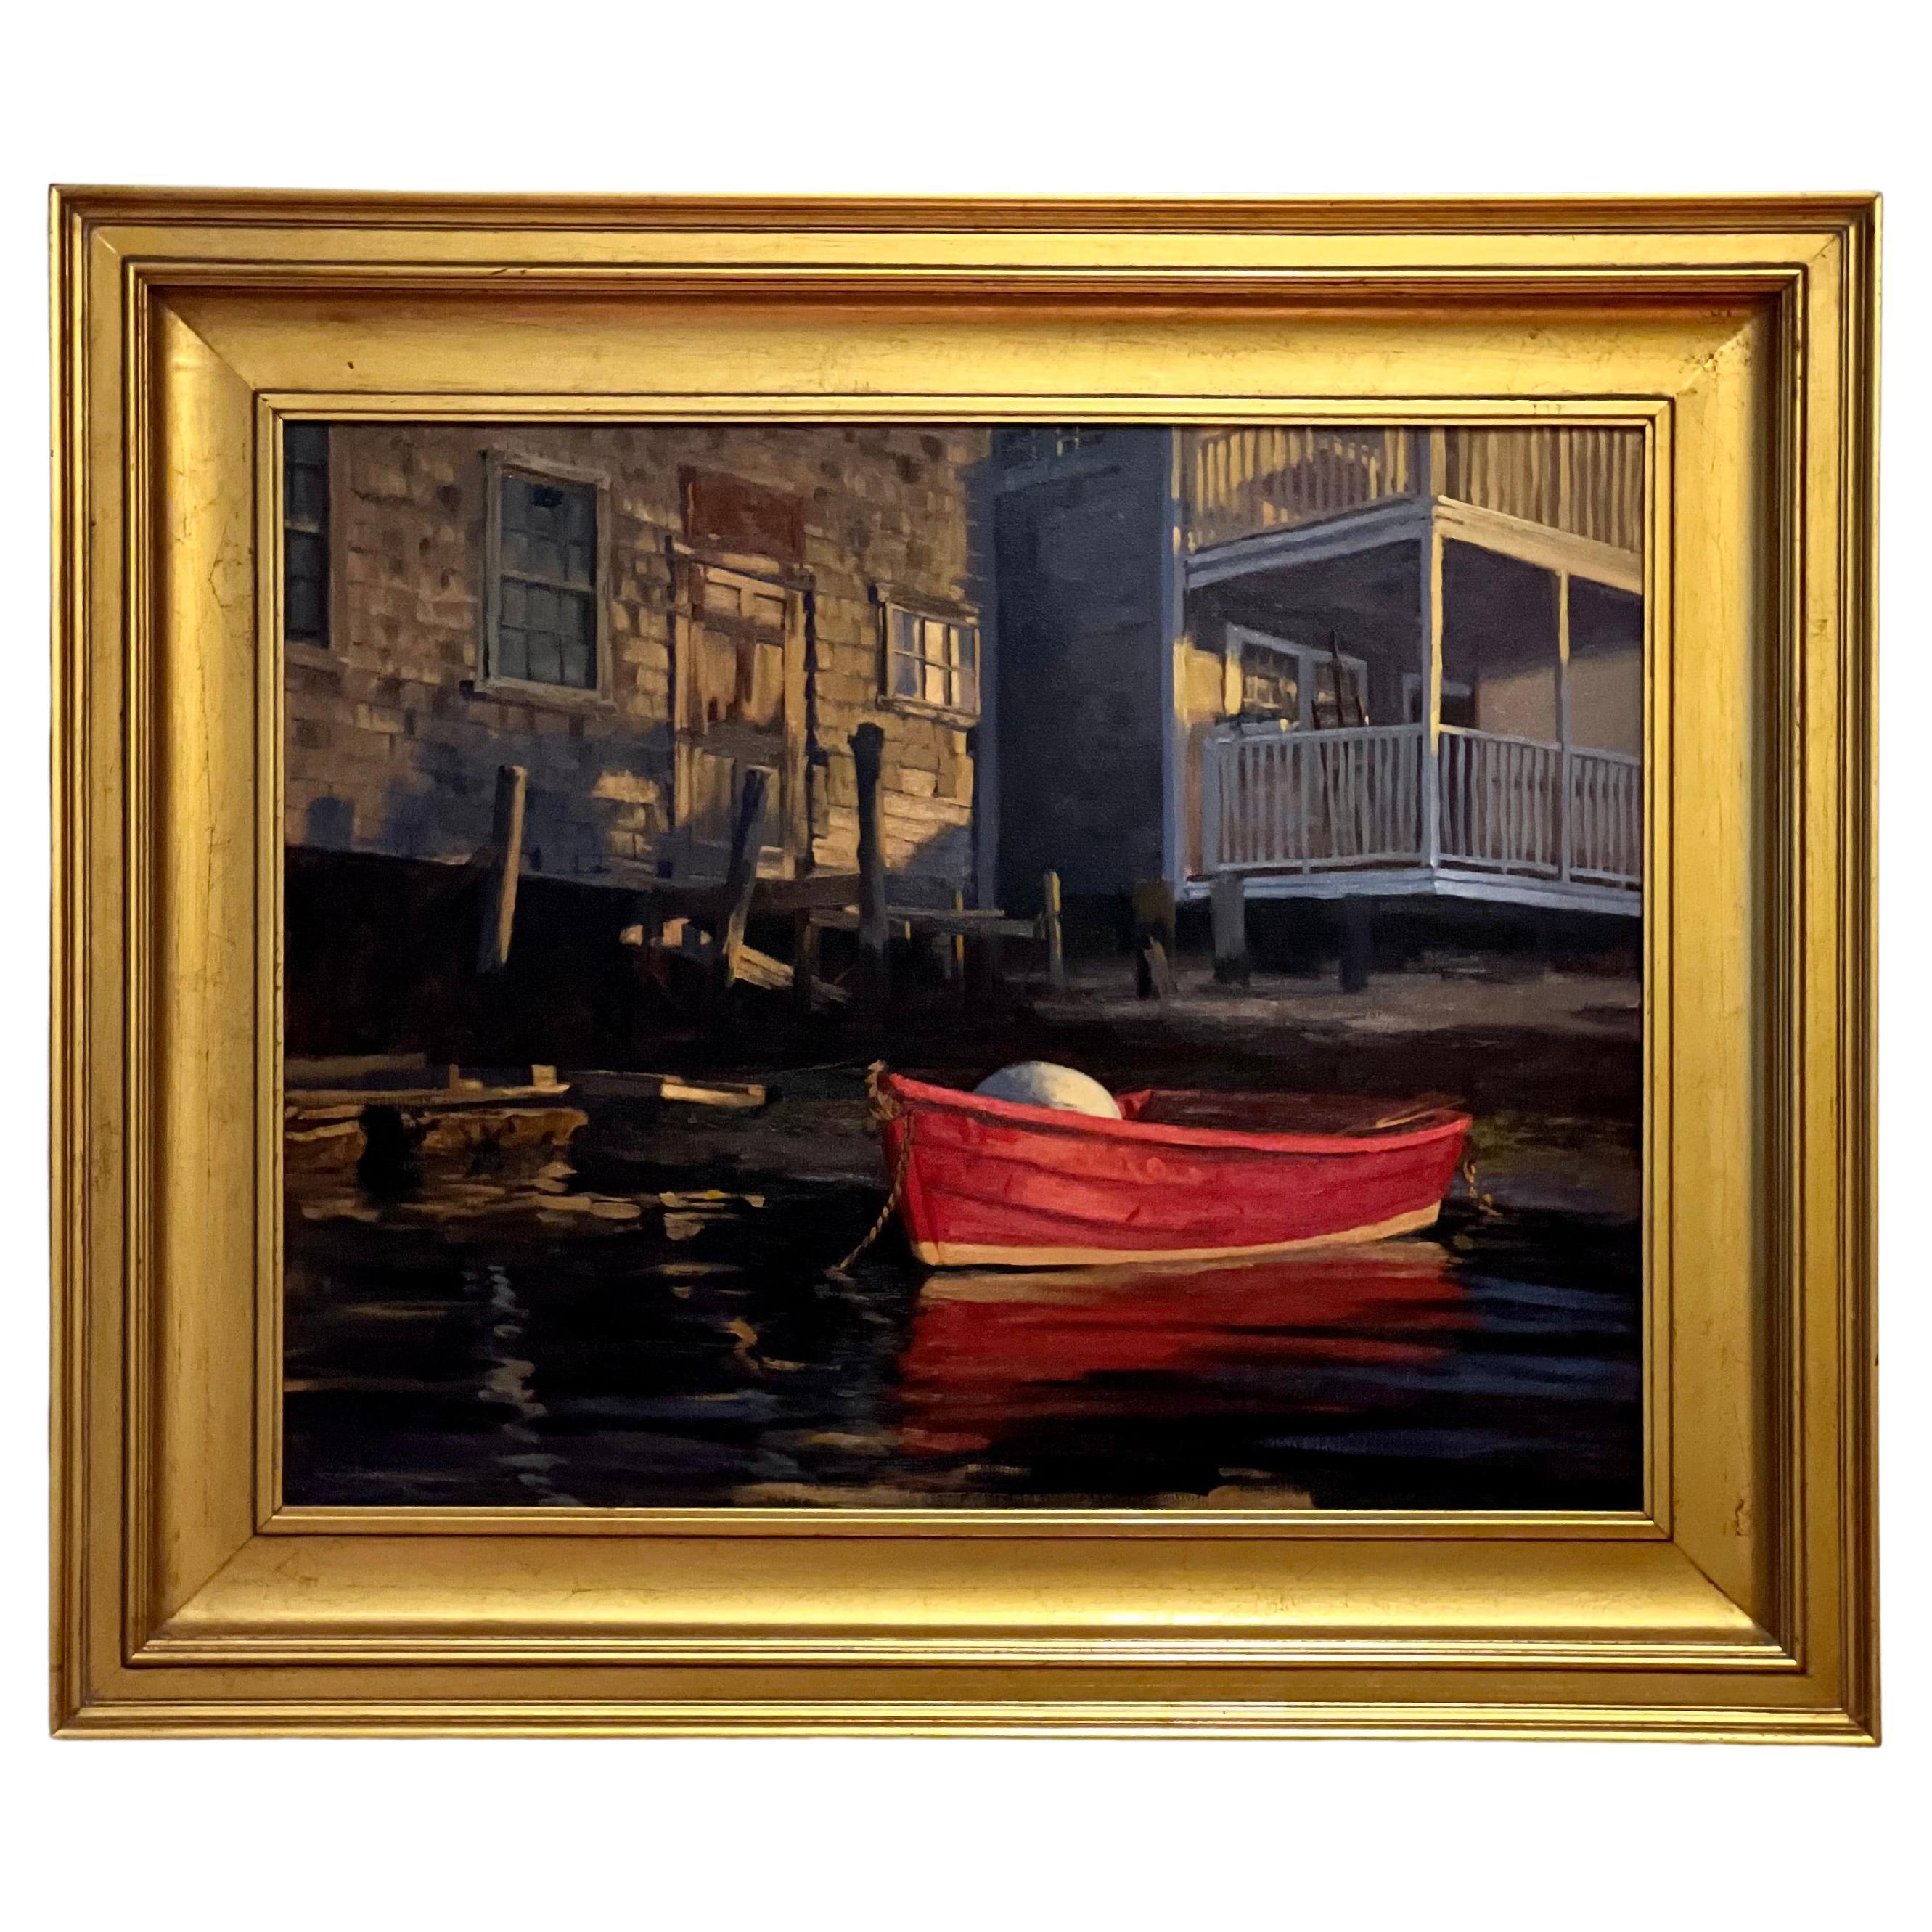 Louis Guarnaccia (b. 1958), “Easy Street Boat Basin,” Nantucket.

A fine realist work in oil on linen. Charming red boat scene on the island of Nantucket, Massachusetts. Signed on lower left and back.

Unframed: 30